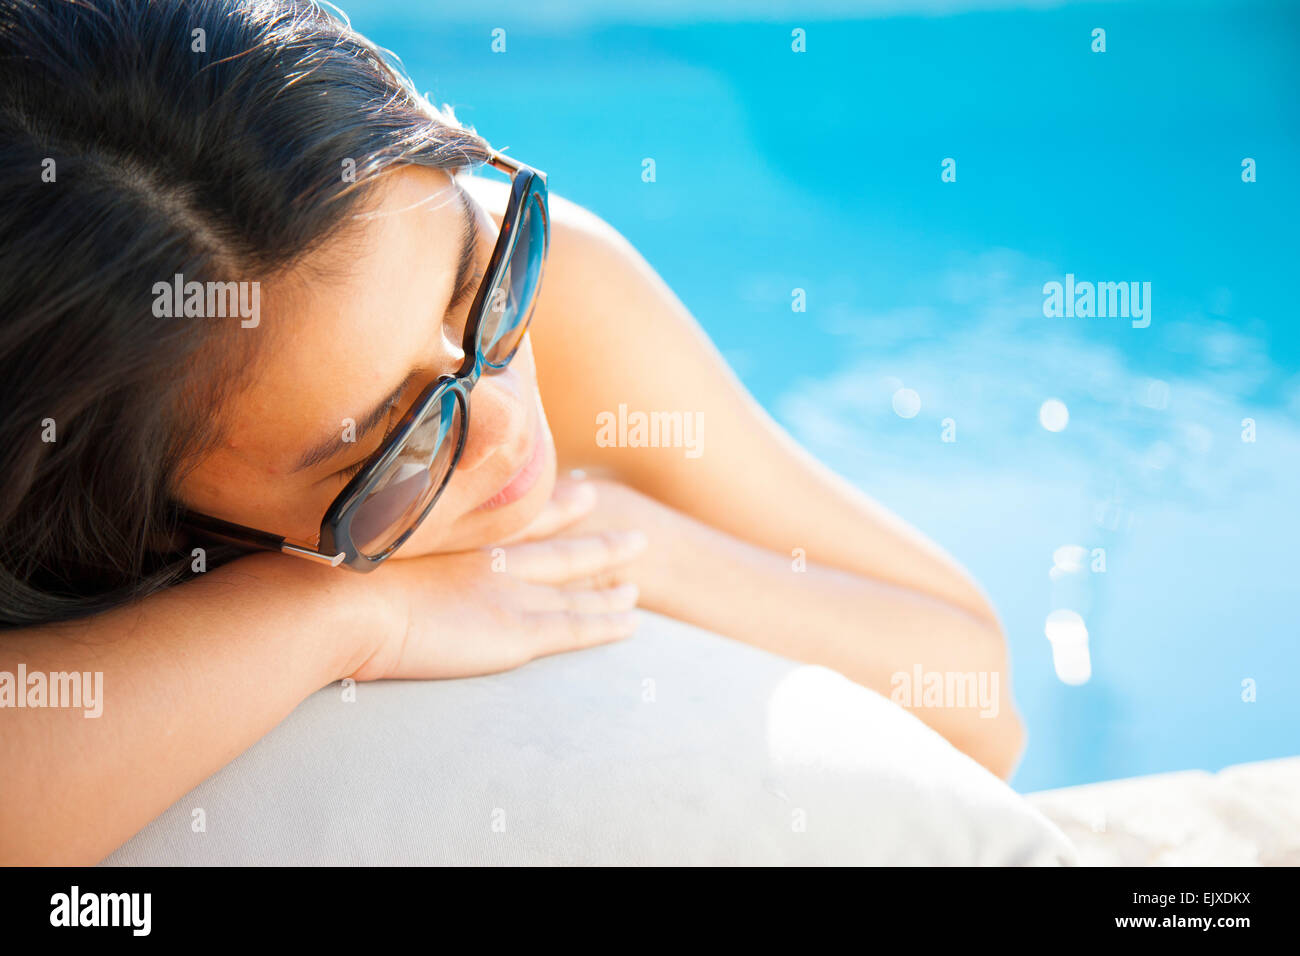 Woman Lying on Swimming Pool Edge Stock Photo